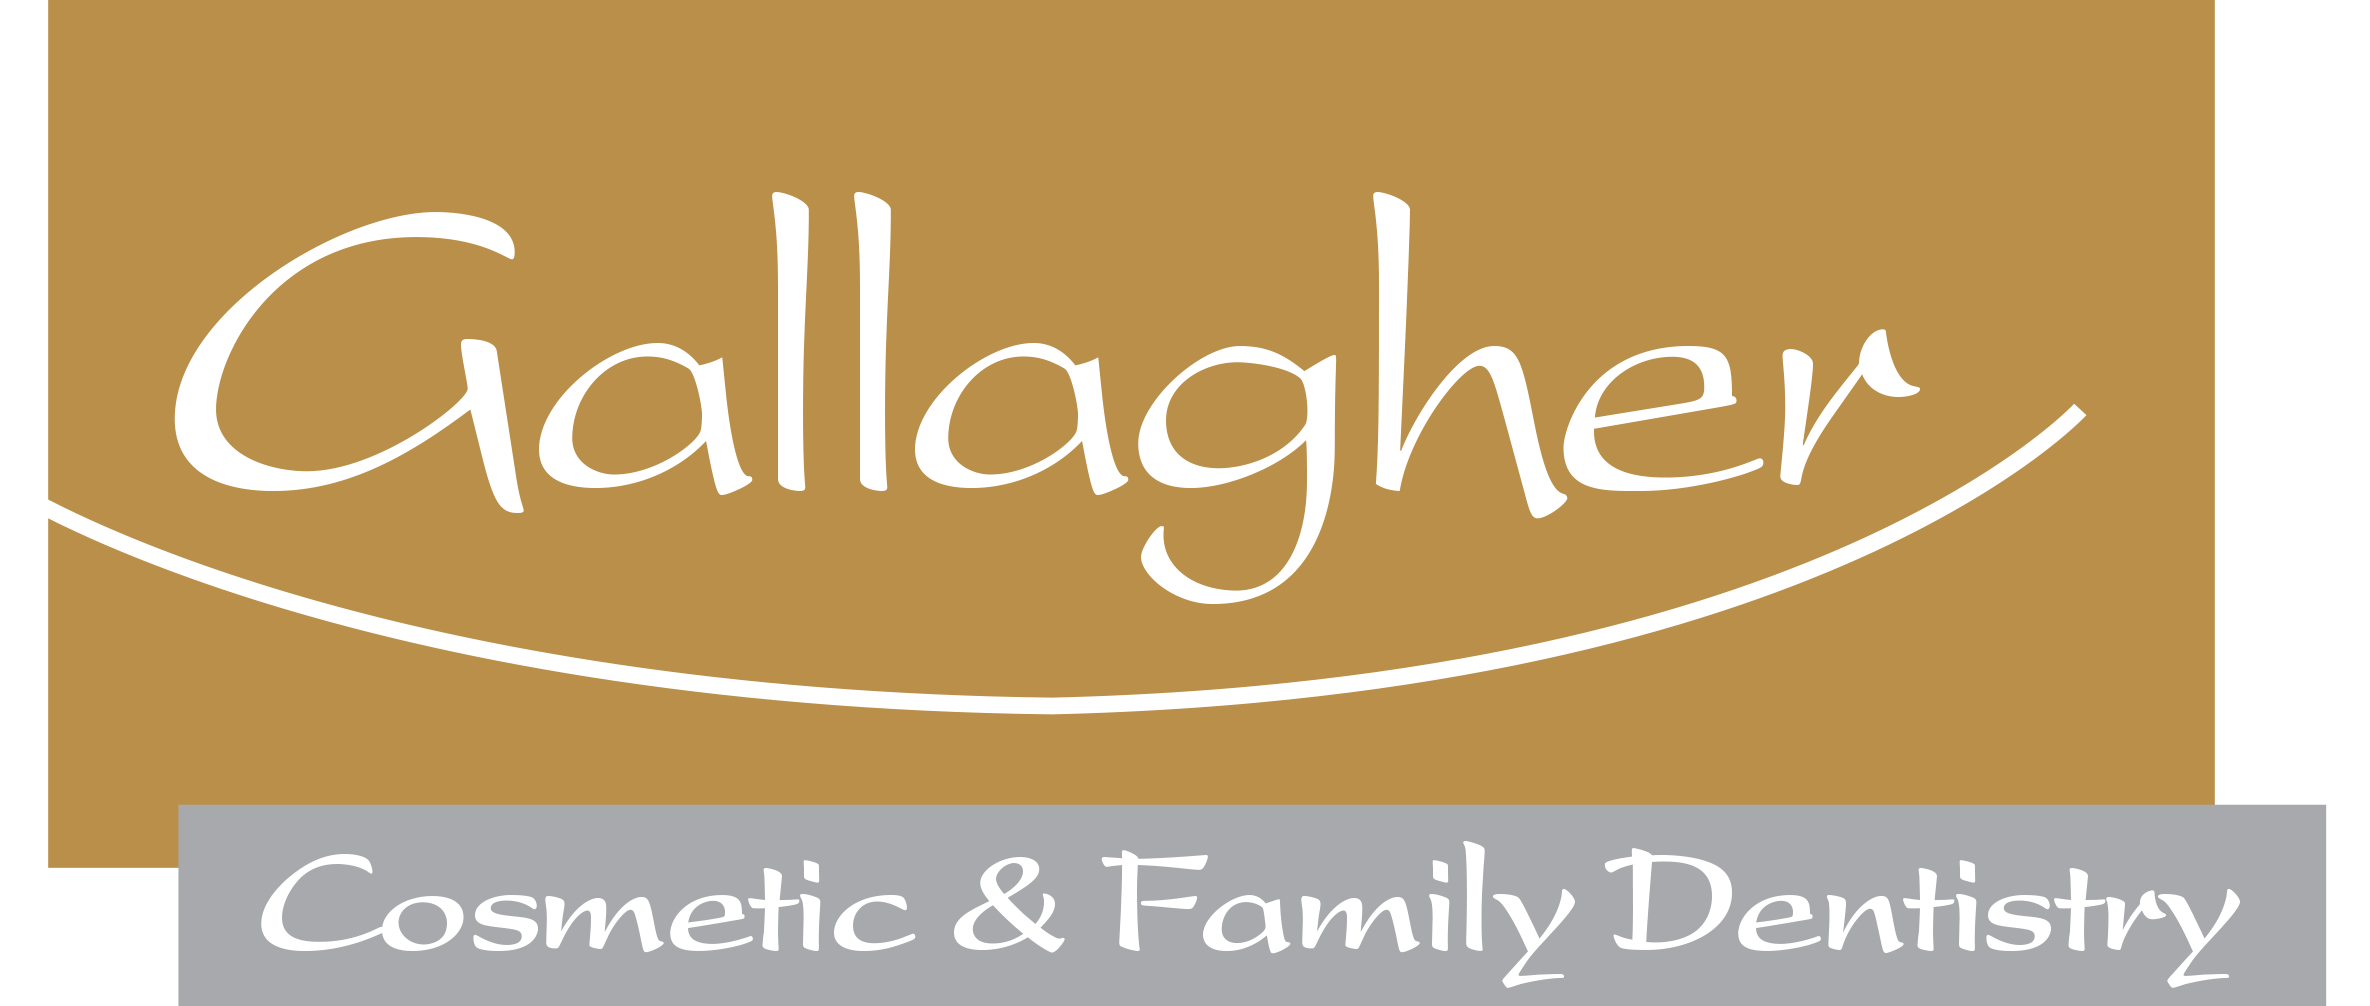 Gallagher Logo - TxCos Logo Crop Cosmetic & Family Dentistry